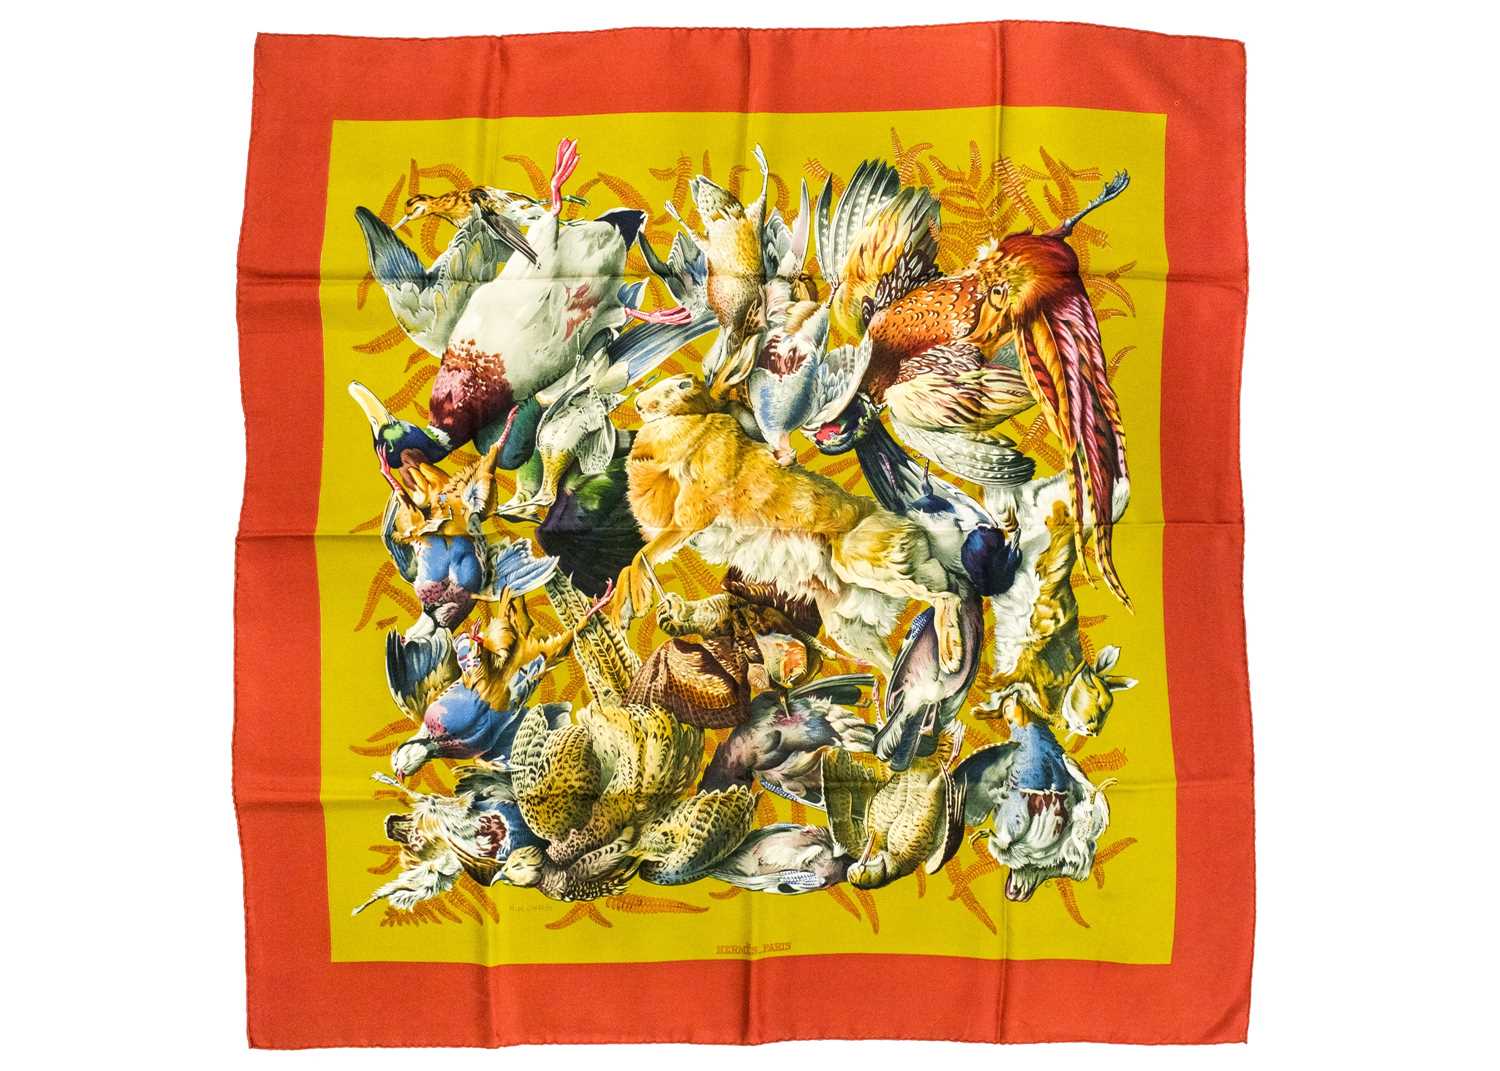 HERMES - A printed silk scarf in 'Gibiers' pattern.